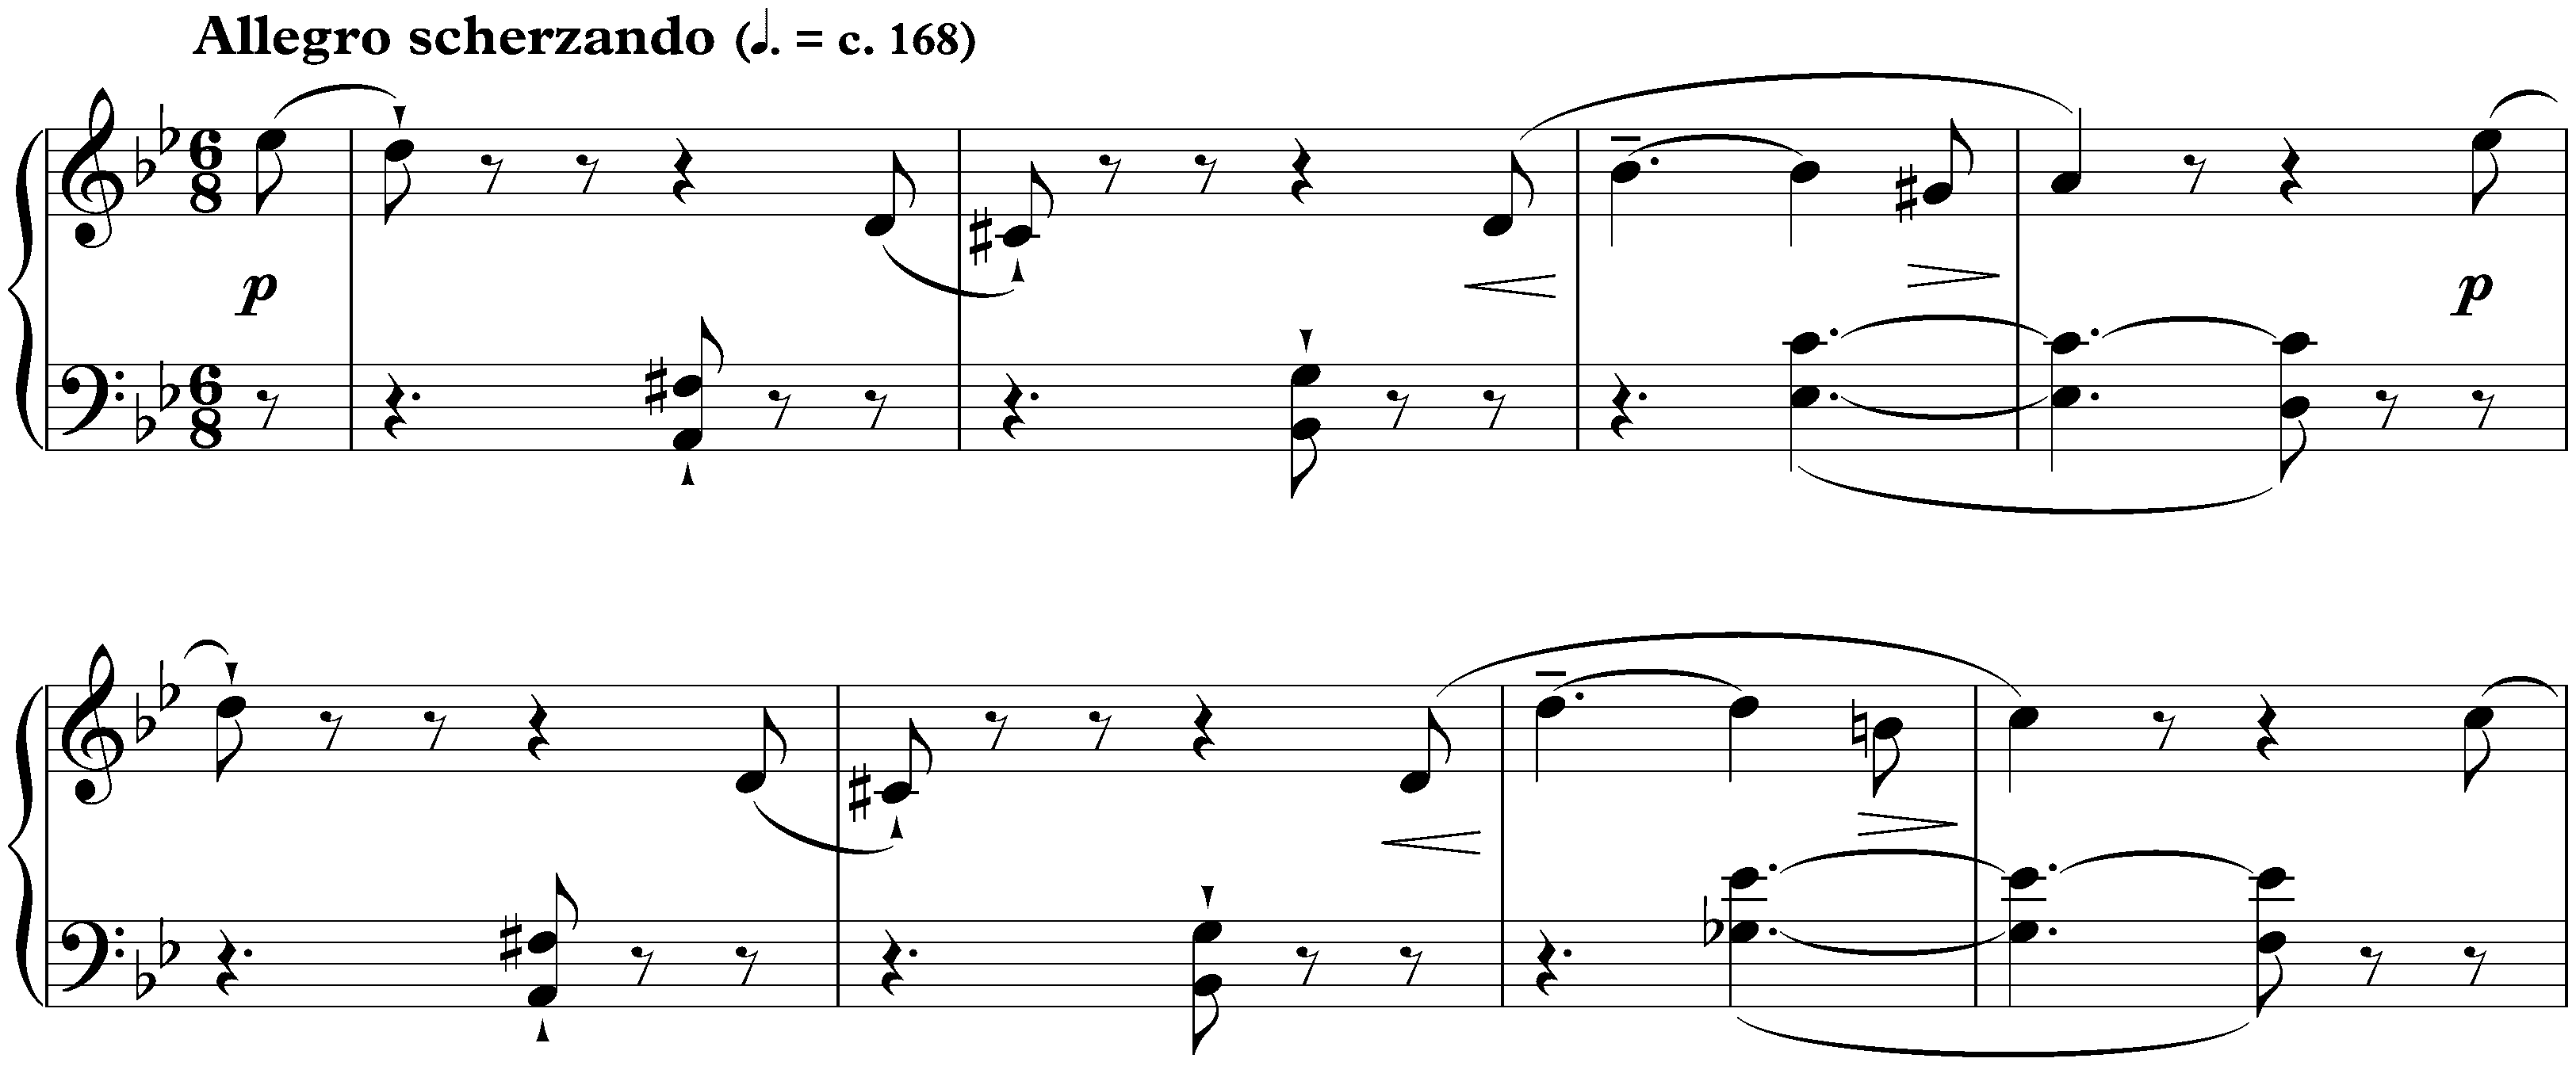 Five Bagatelles, op. 9; 3. Allegro scherzando